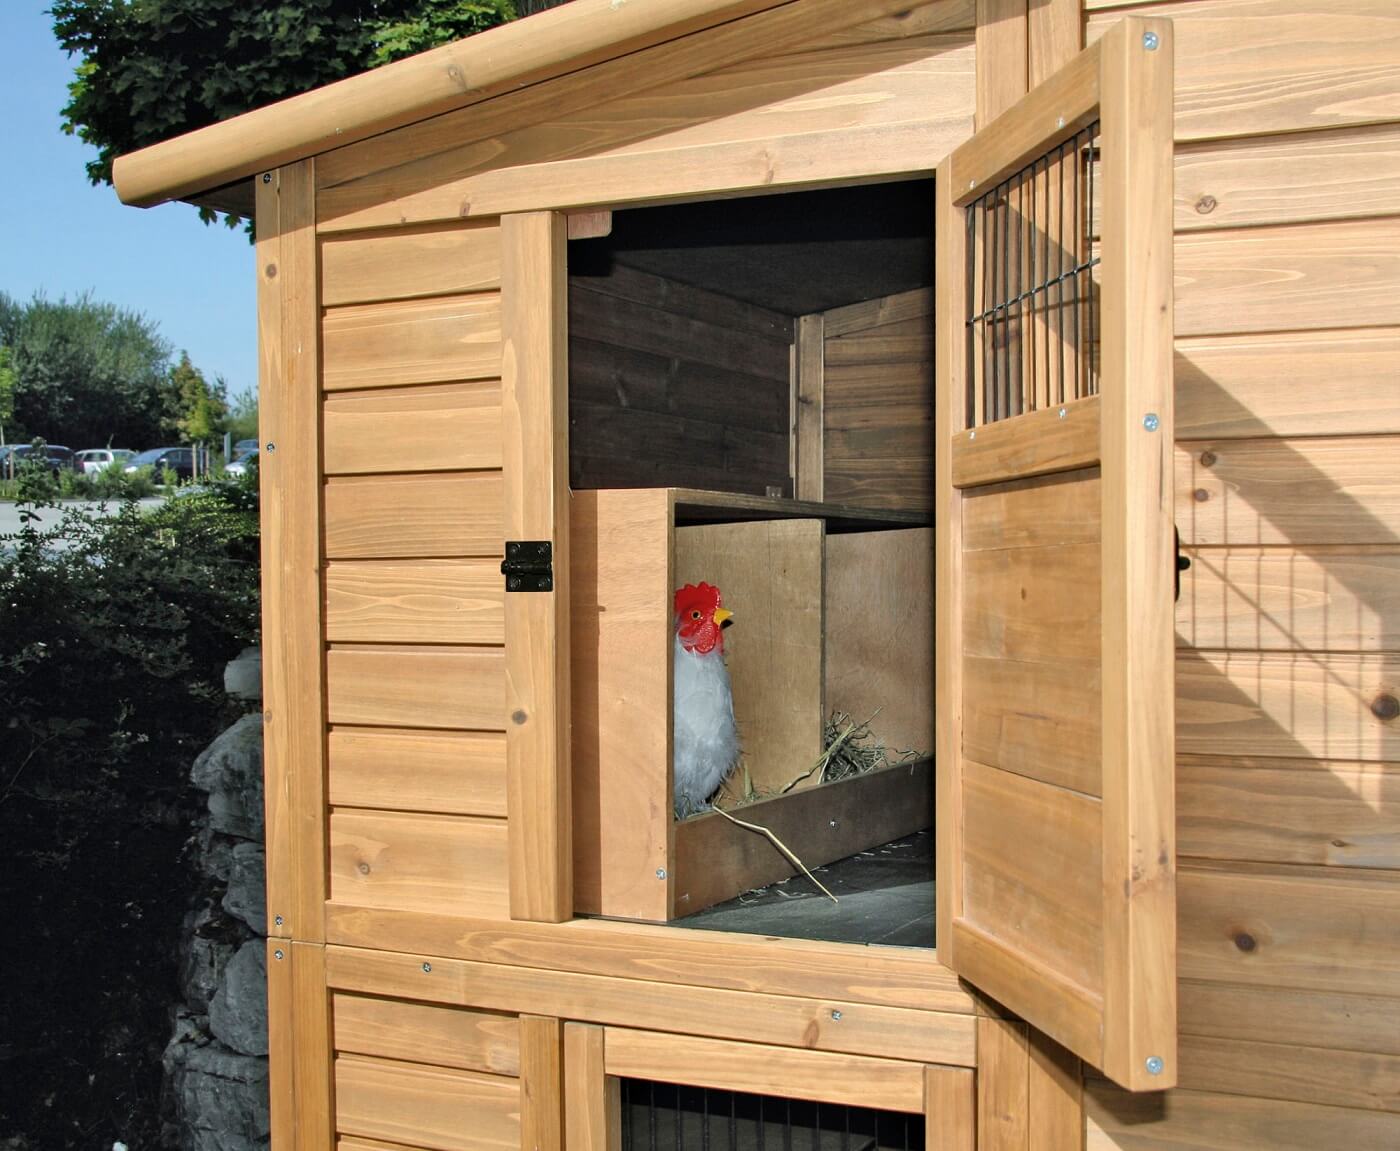 KERBL Hühnerhaus - ideal für Hobbyfarming